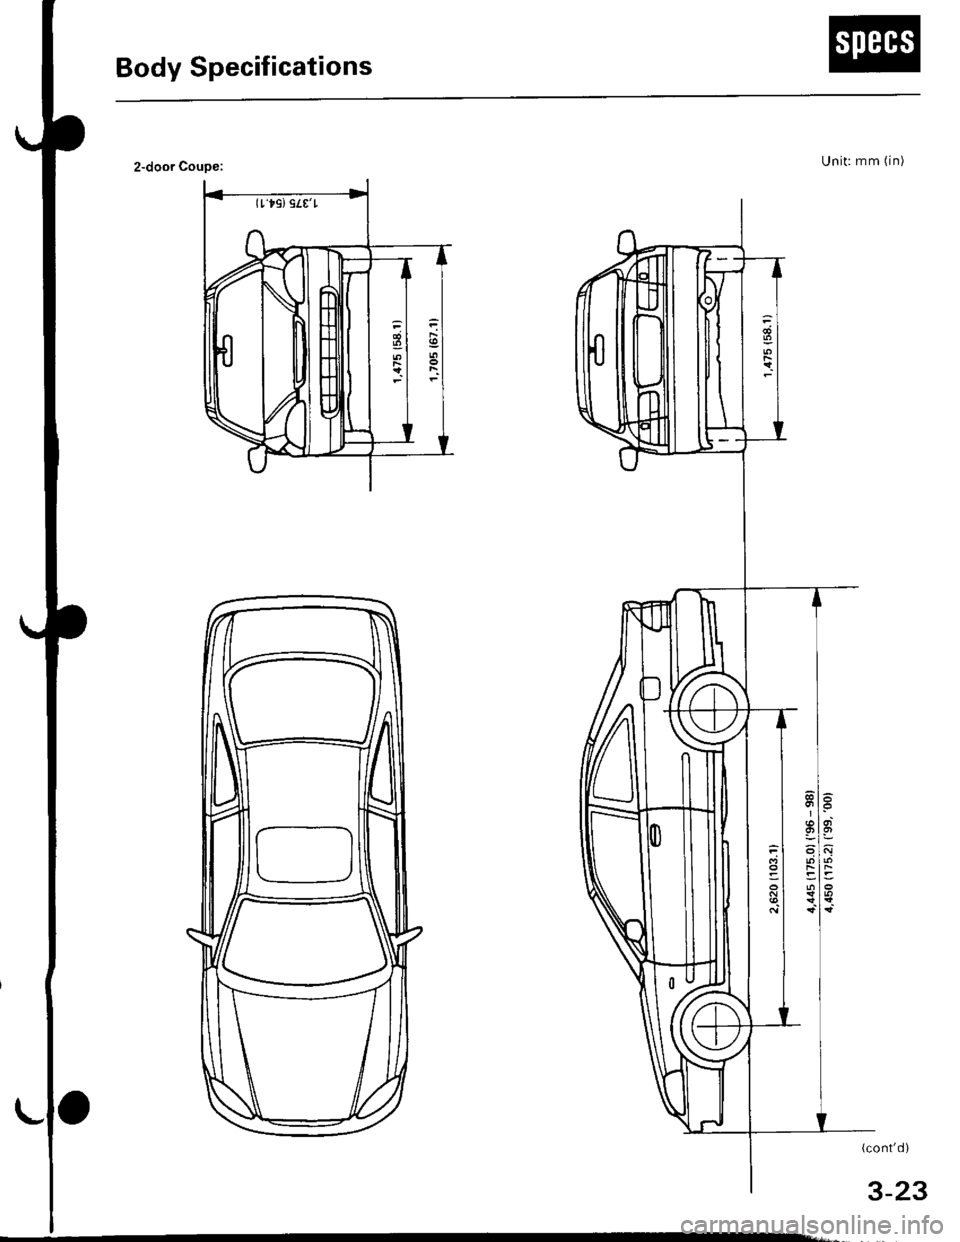 HONDA CIVIC 1999 6.G Repair Manual Body Specifications
Unit: mm (in)2-door Coupe:
lt t9) gttt 